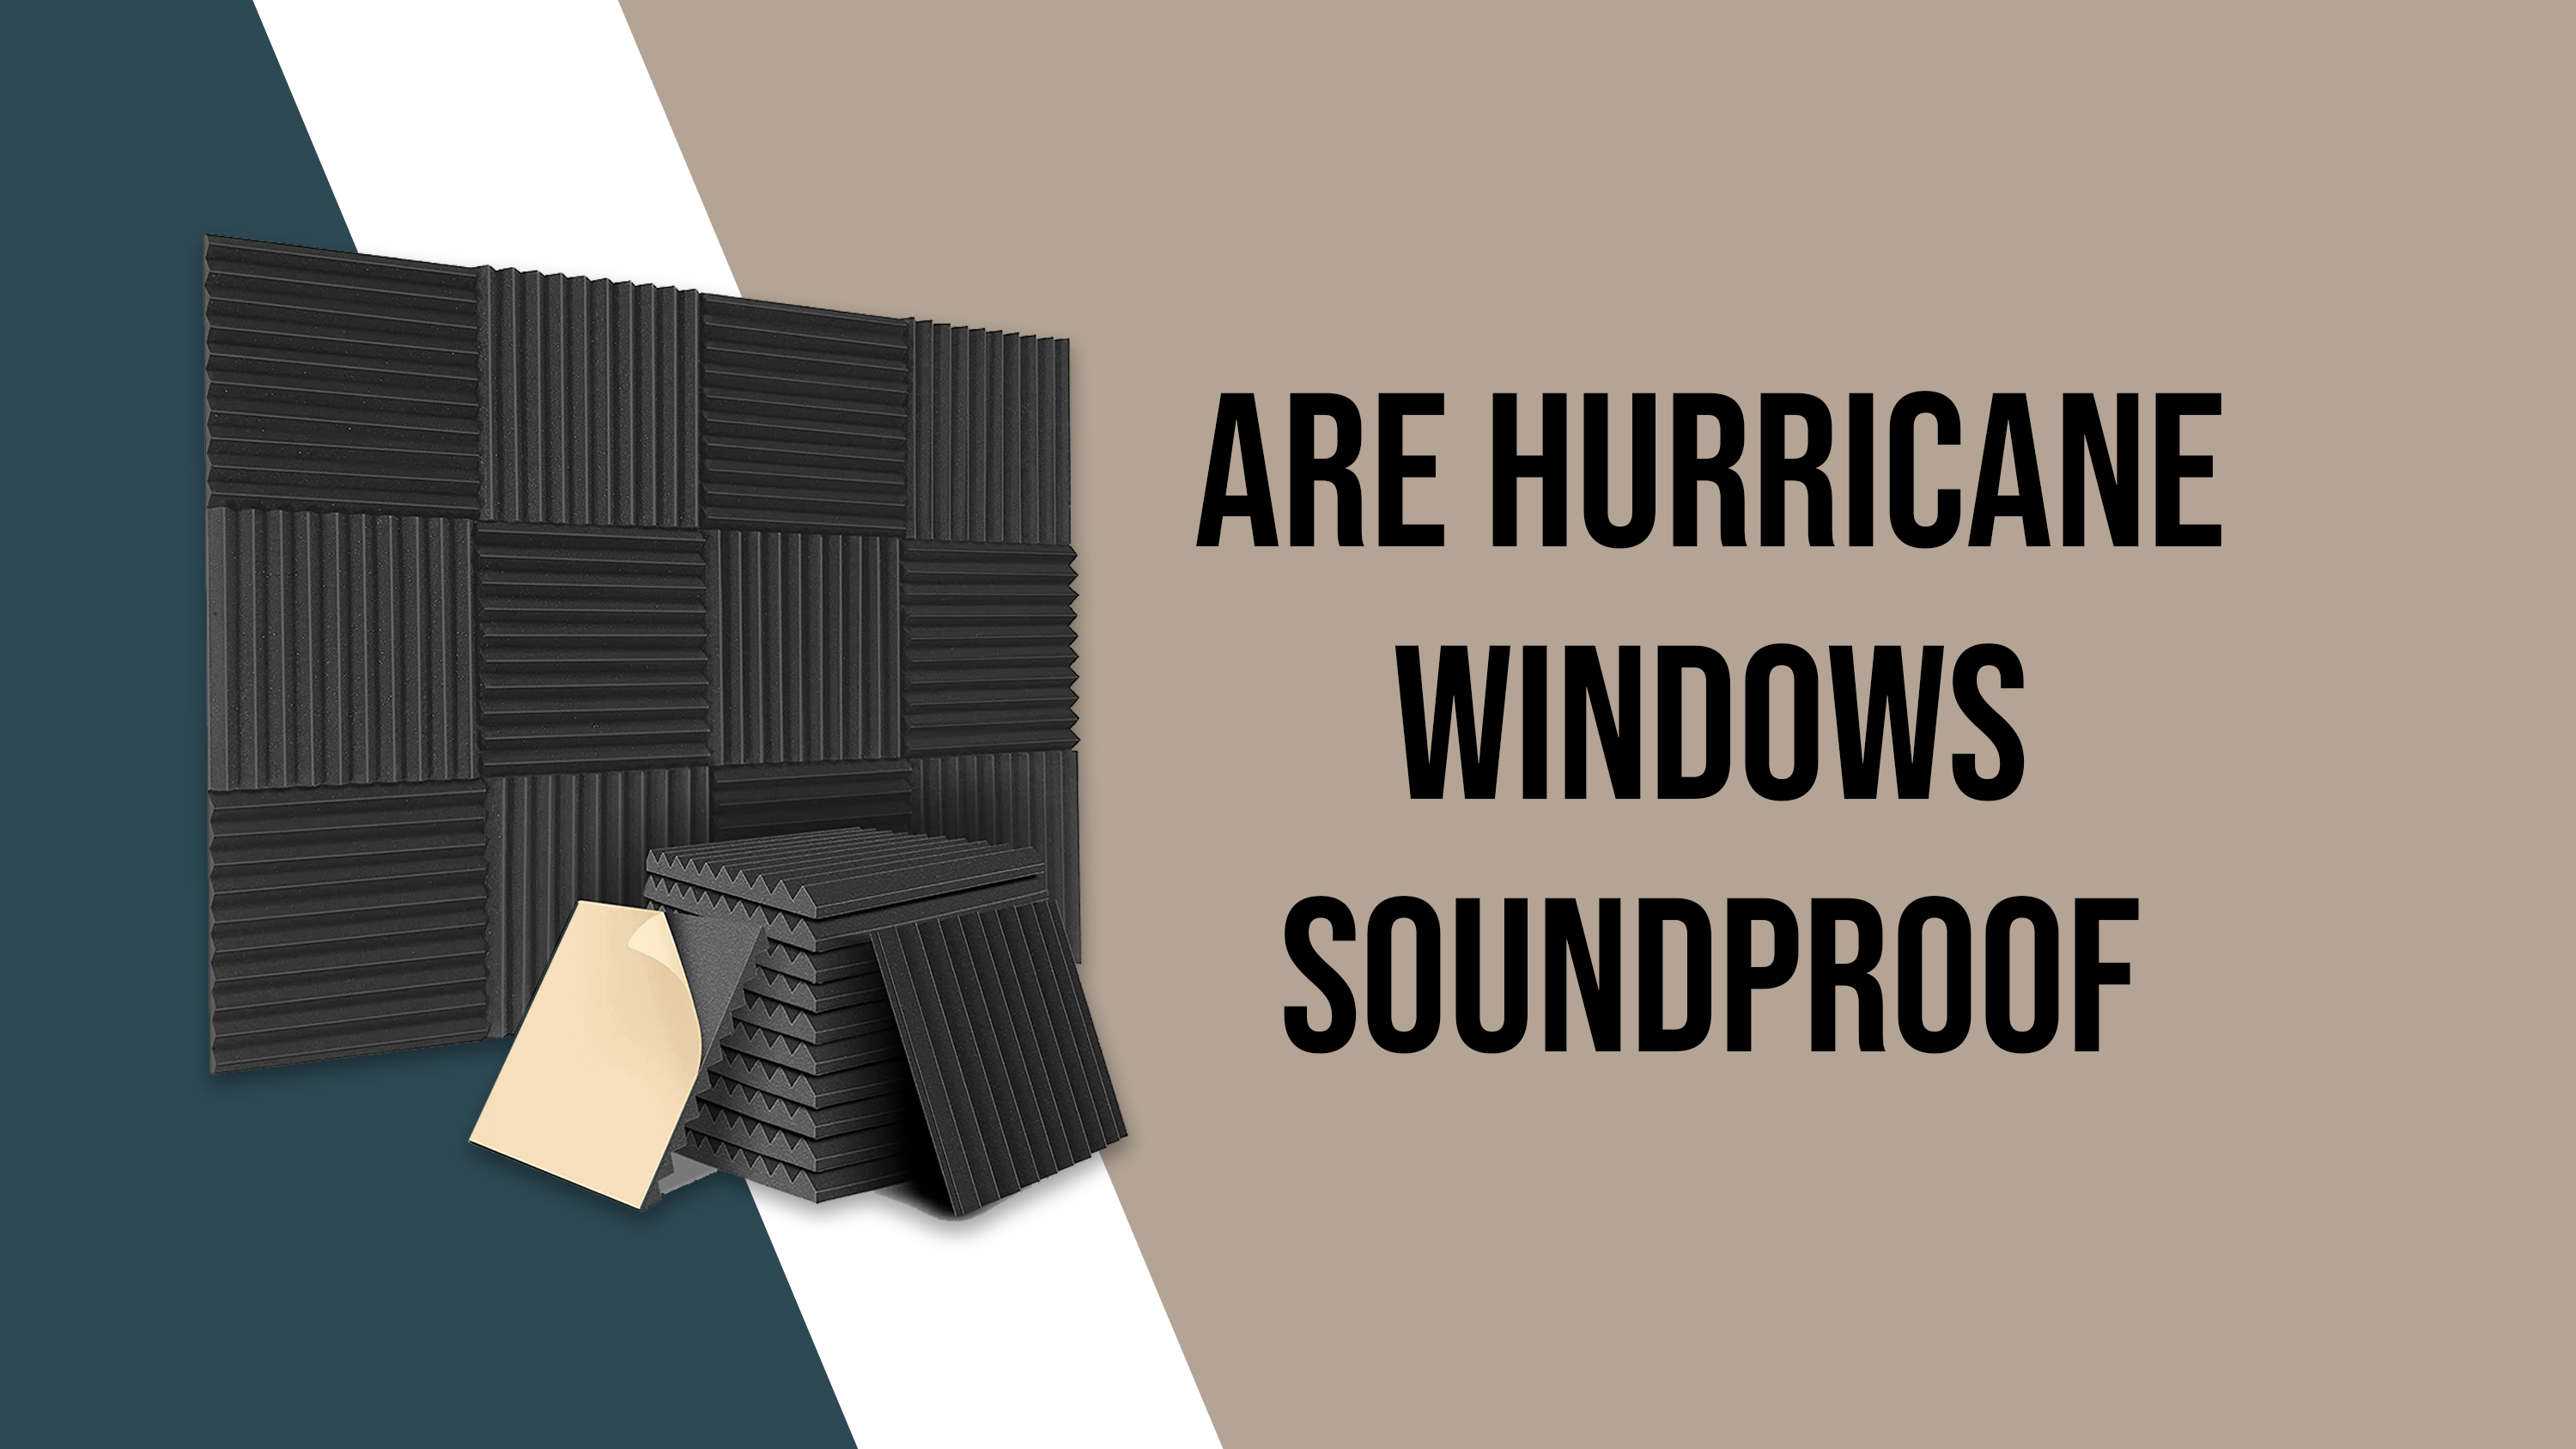 Are hurricane windows soundproof